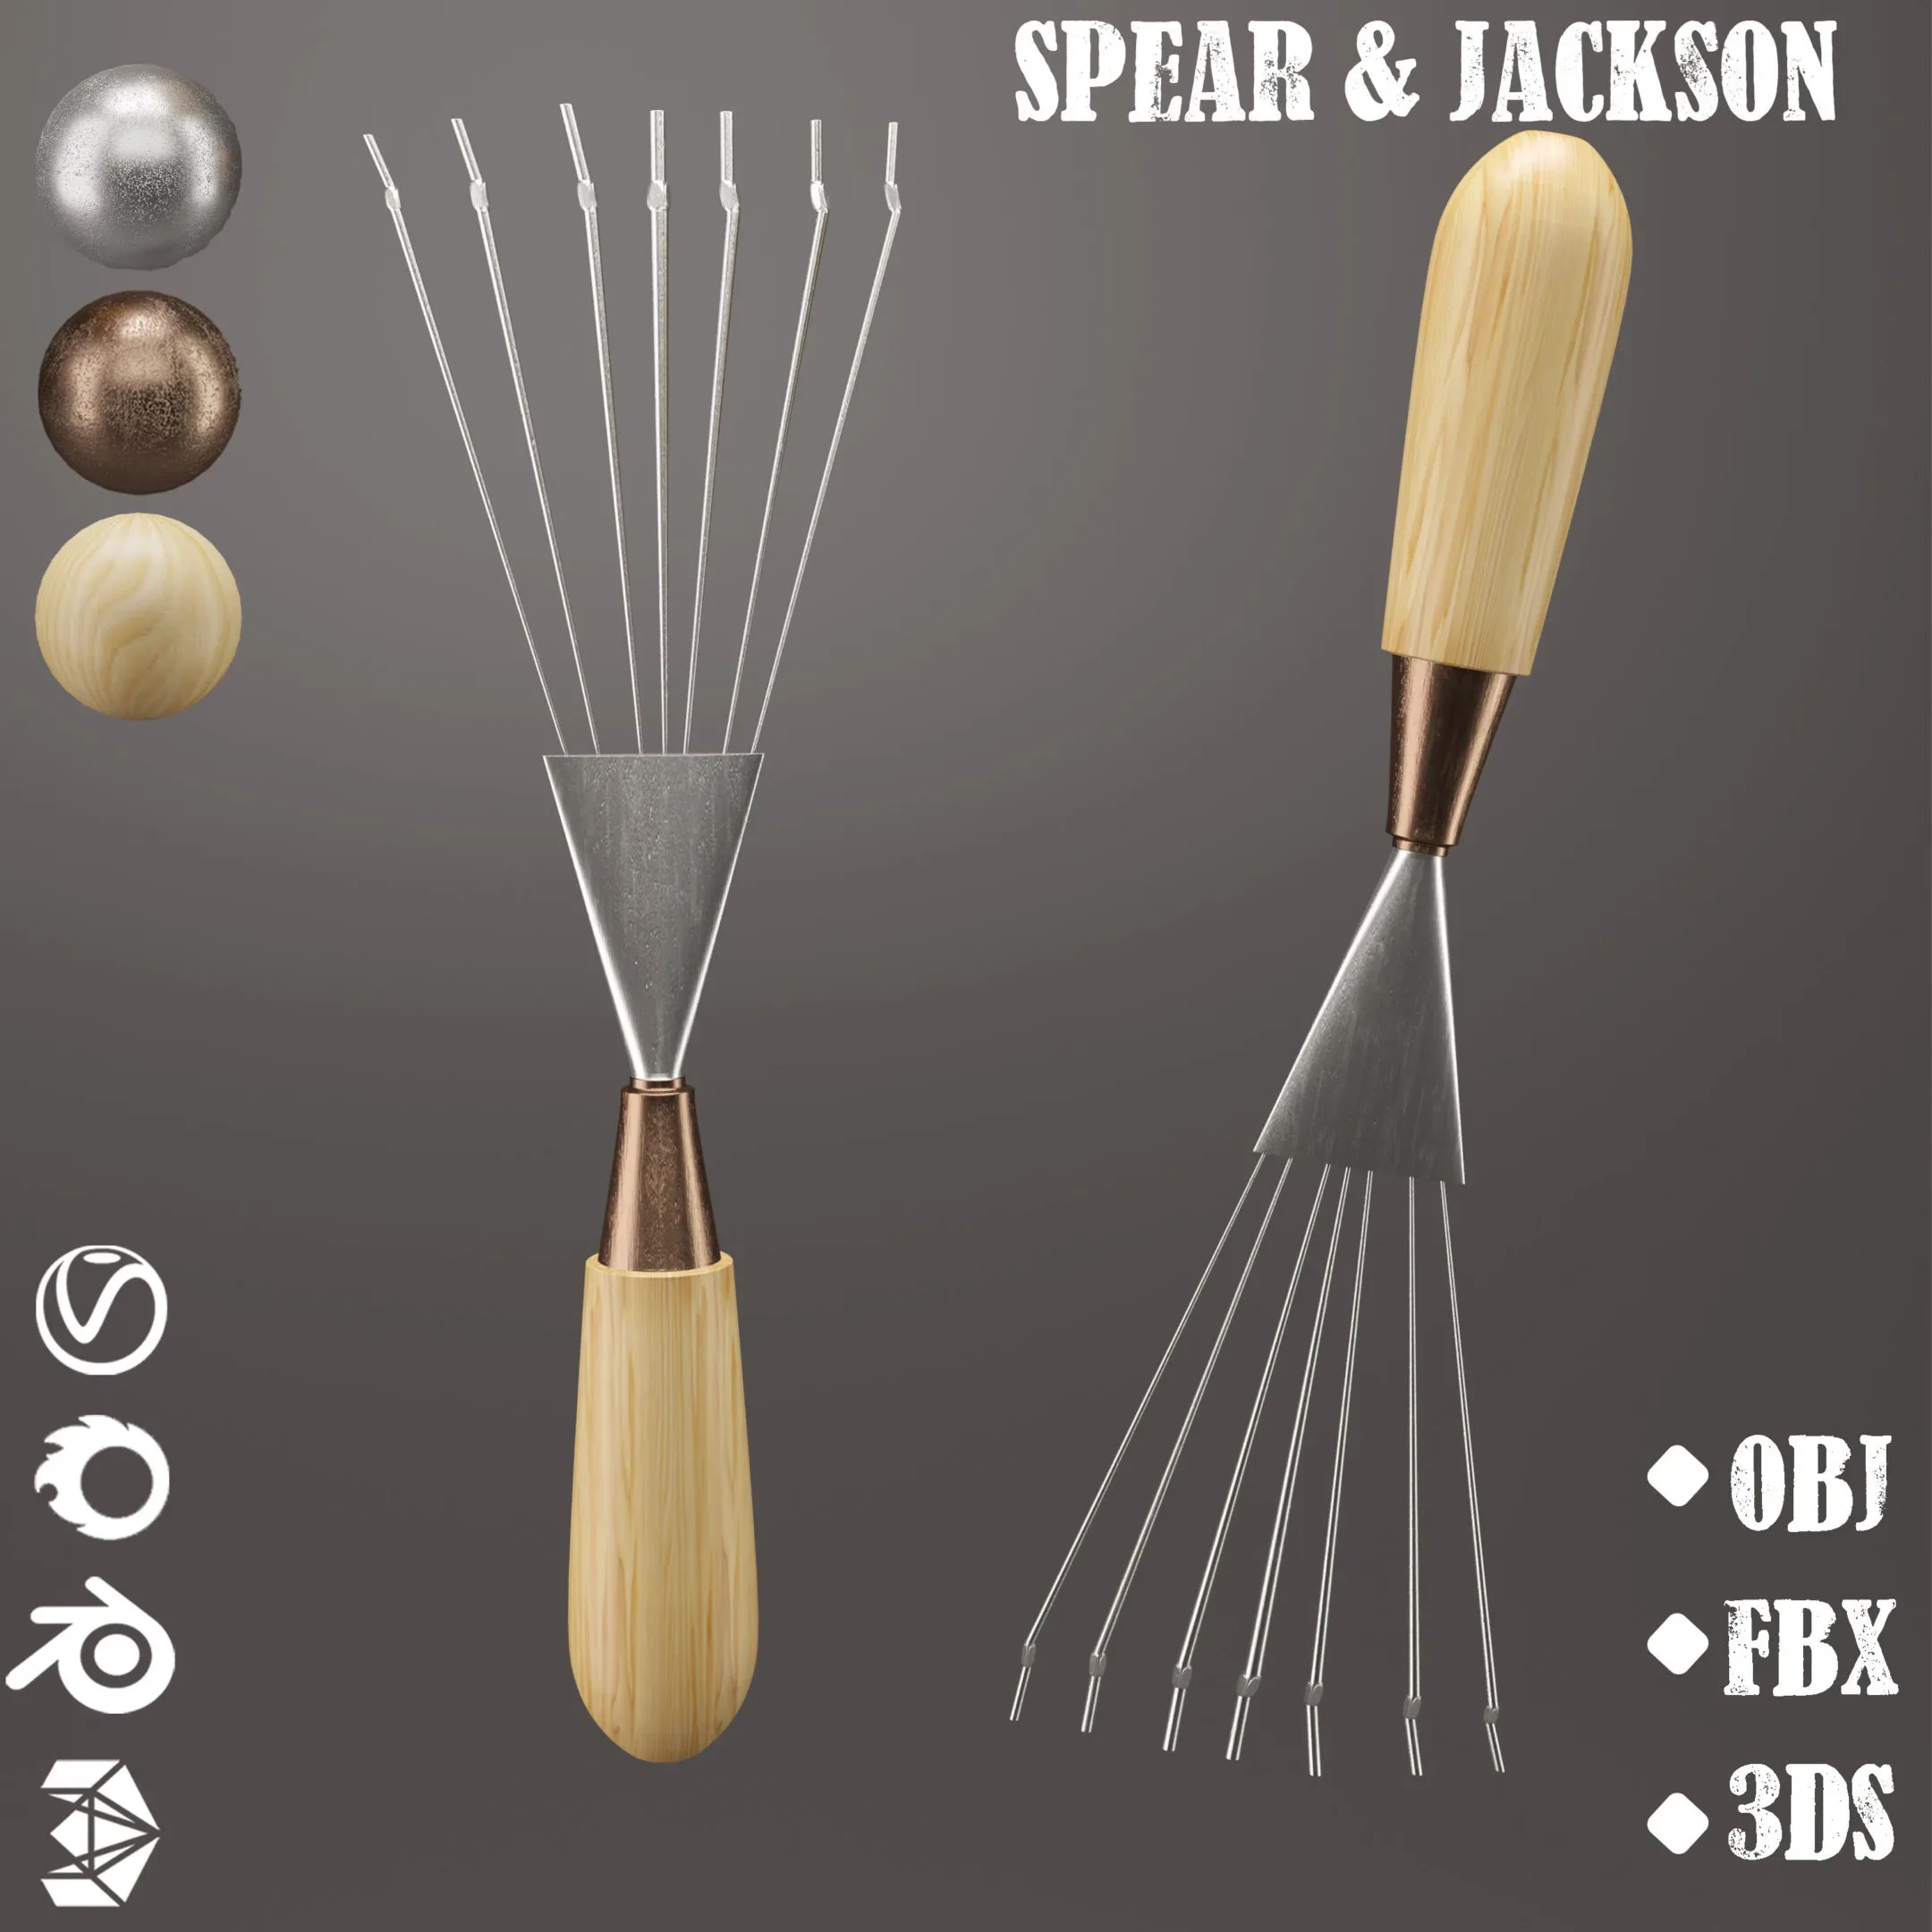 SpearJackson-Gardening tools Vol 01